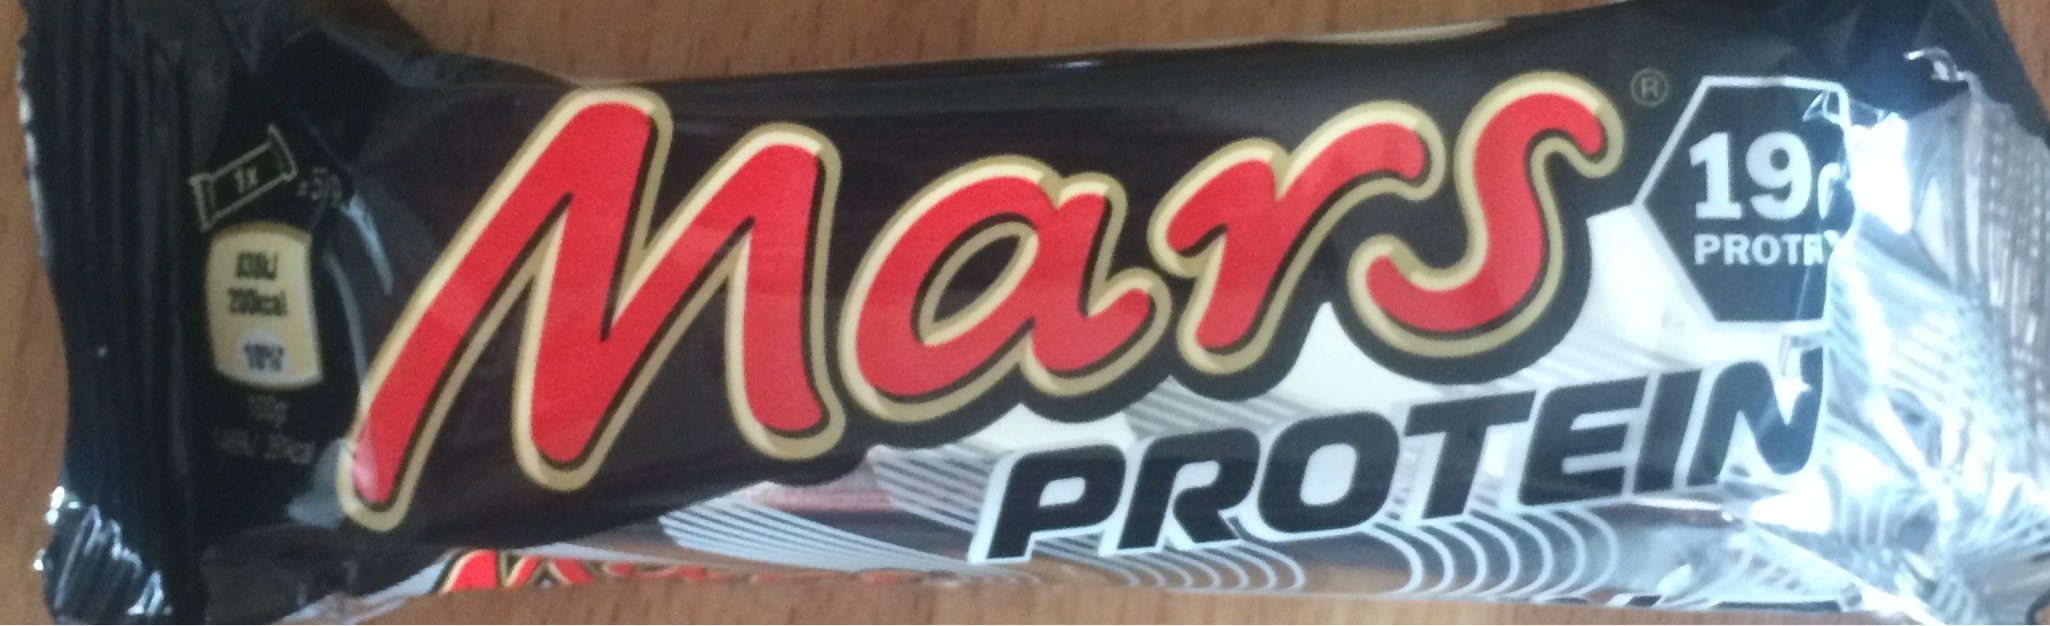 Mars protein - Produit